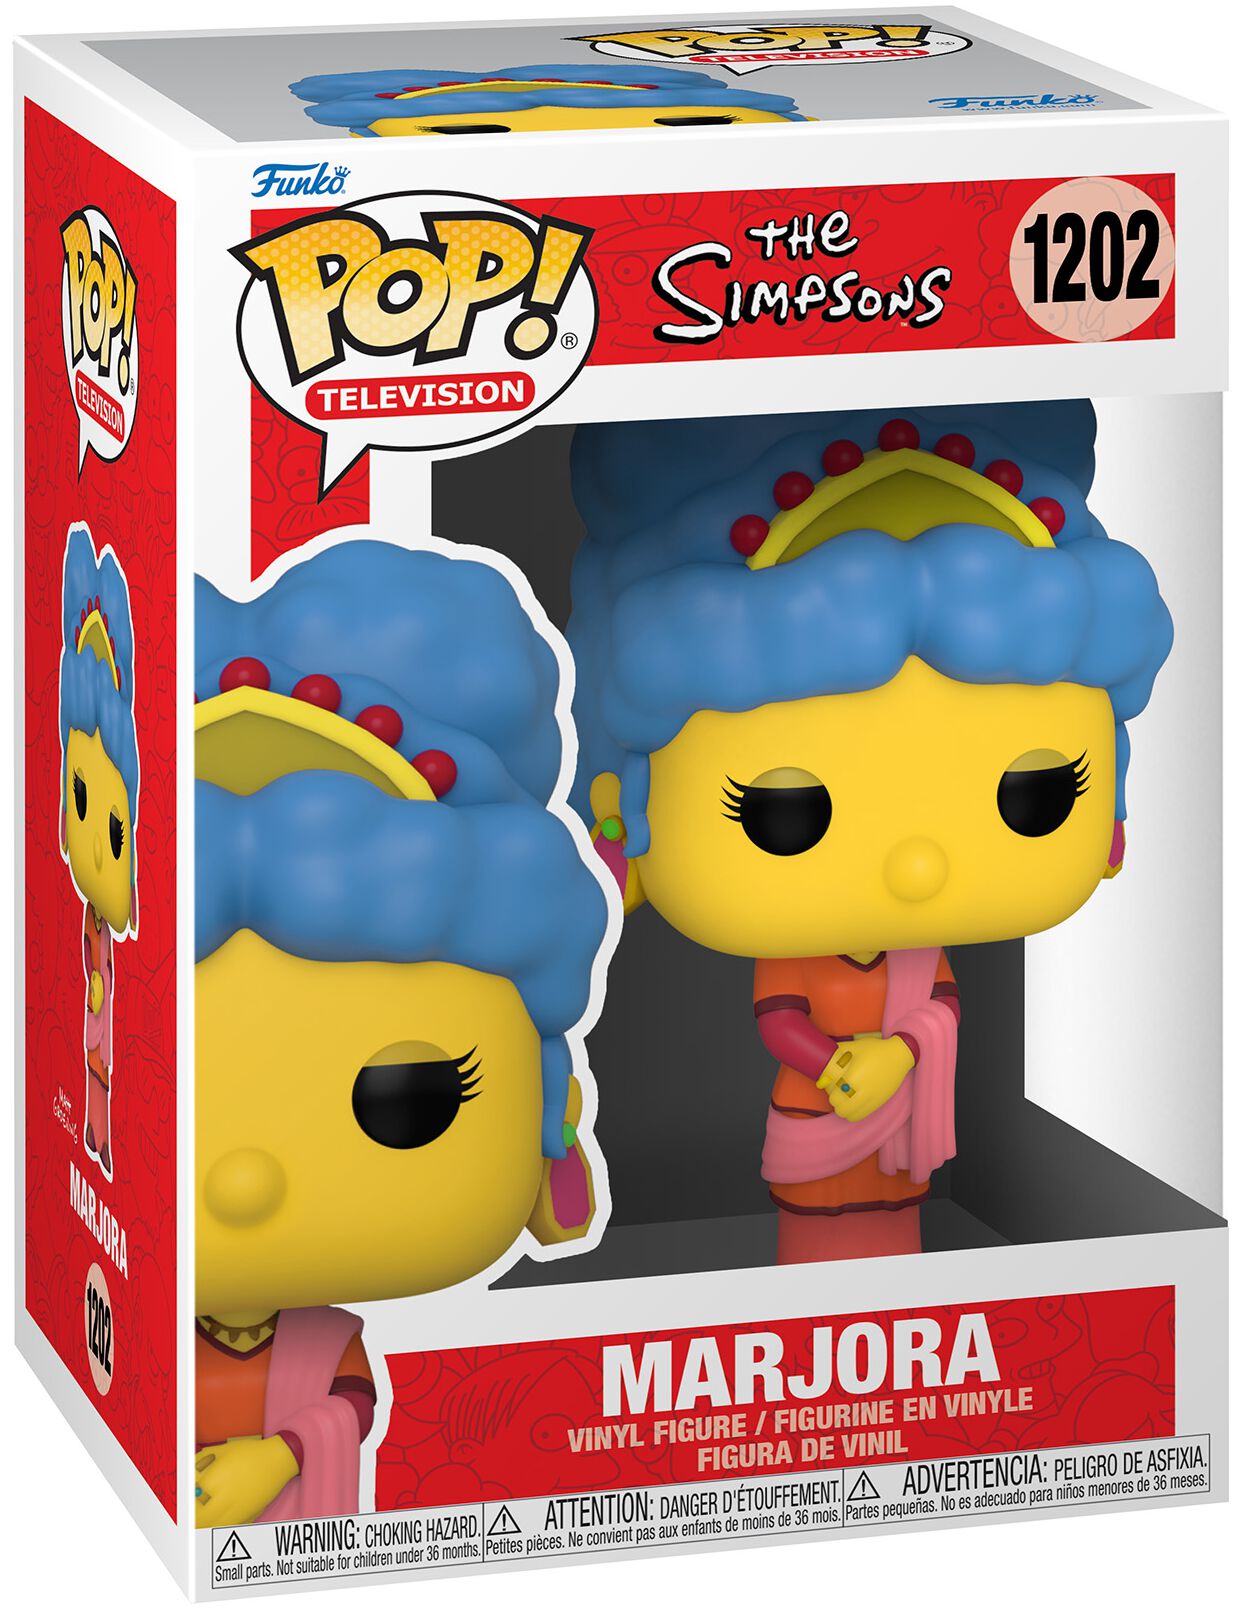 The Simpsons Marjora Vinyl Figure 1202 Funko Pop! multicolor